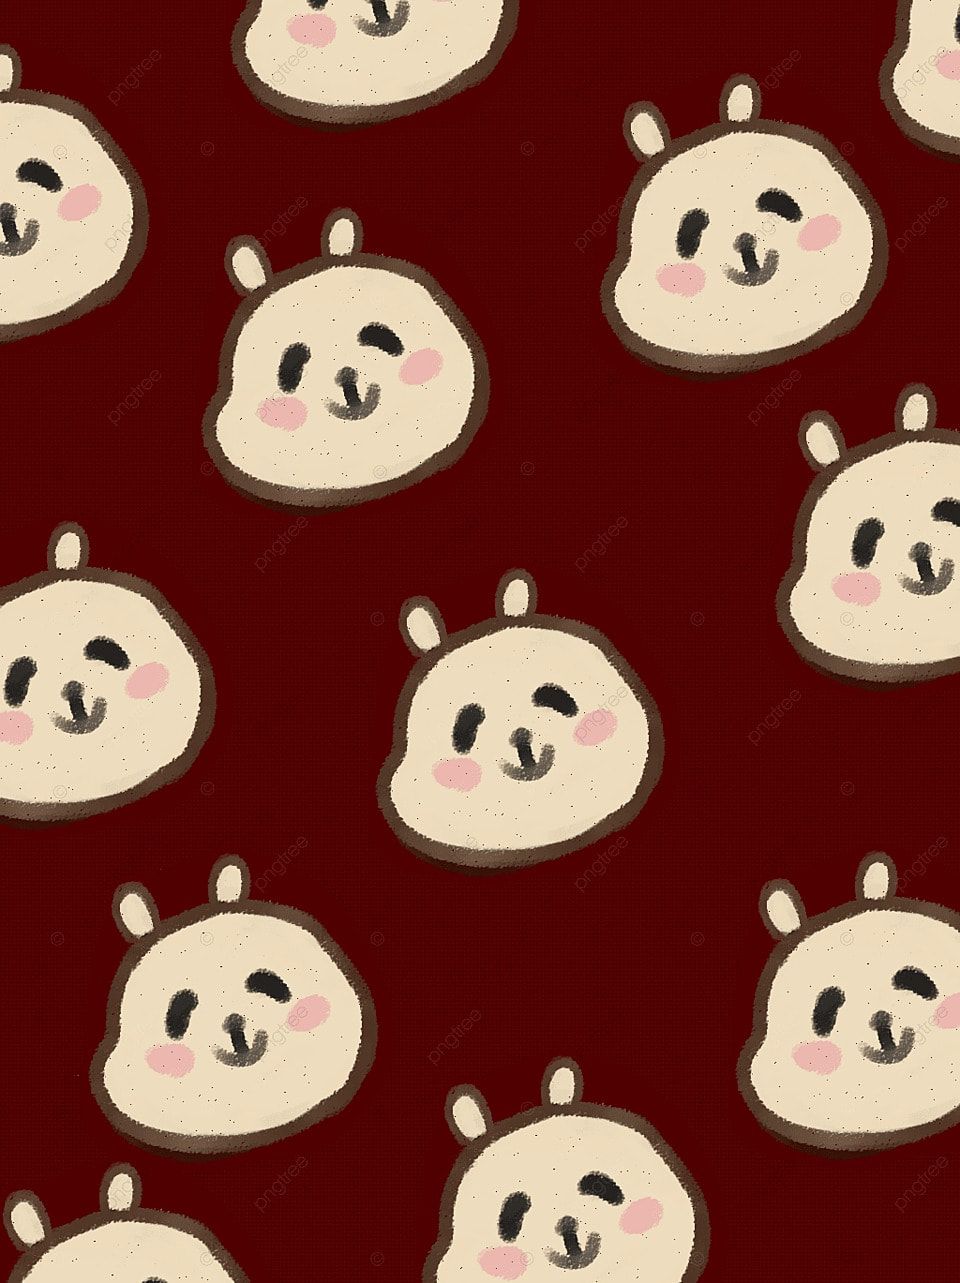 A cute pattern of cartoon pandas on a dark red background - Crimson